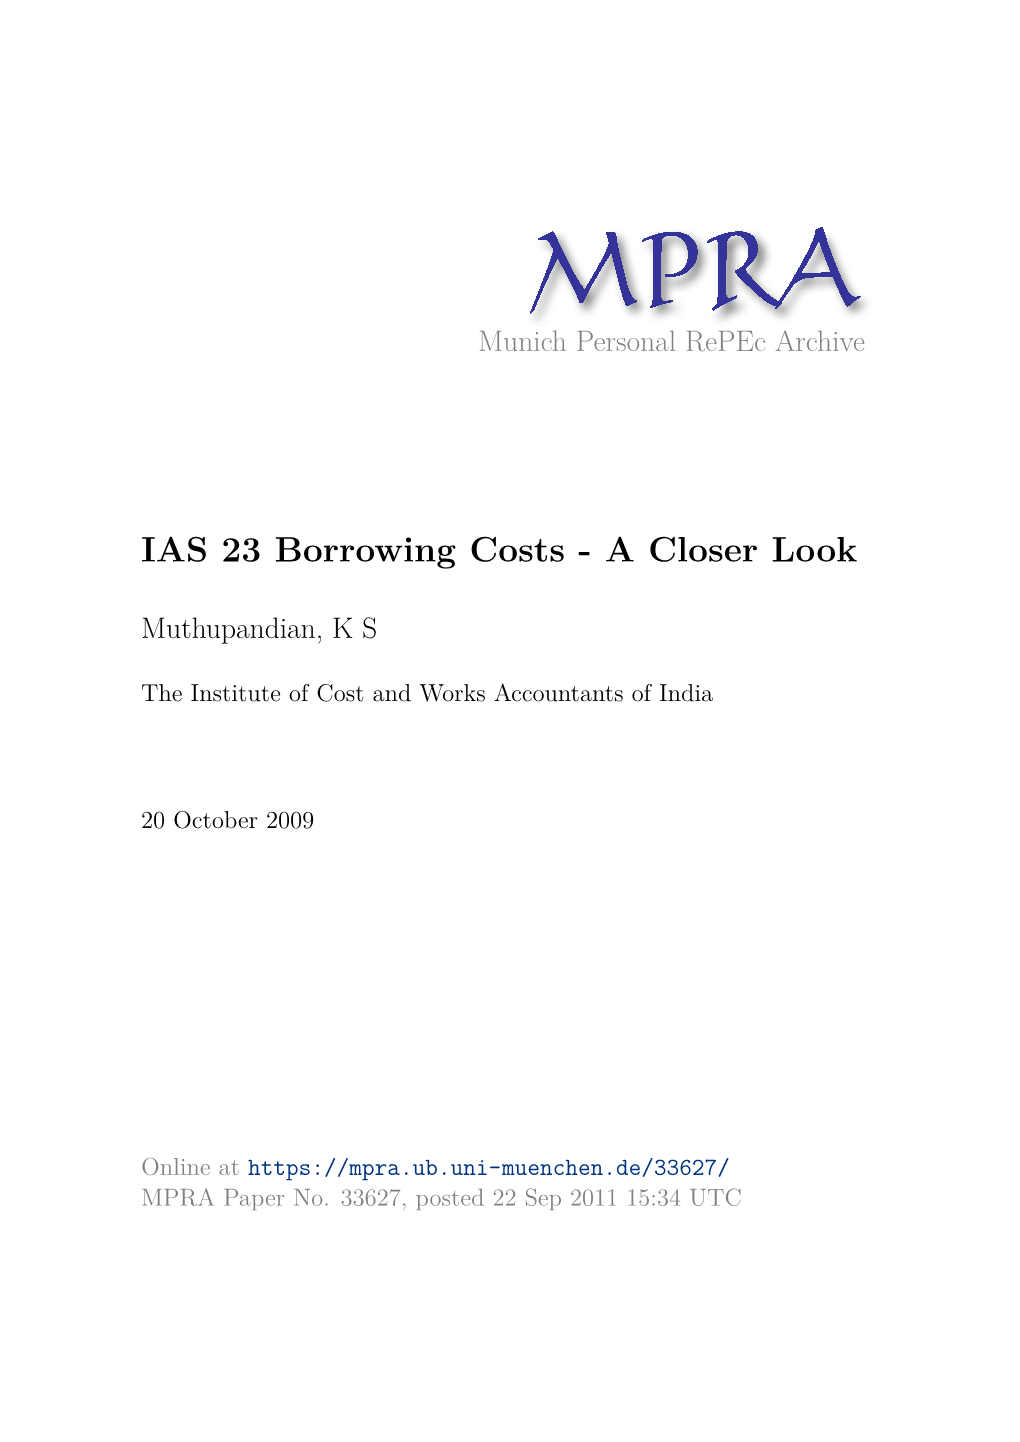 IAS 23 Borrowing Costs - a Closer Look